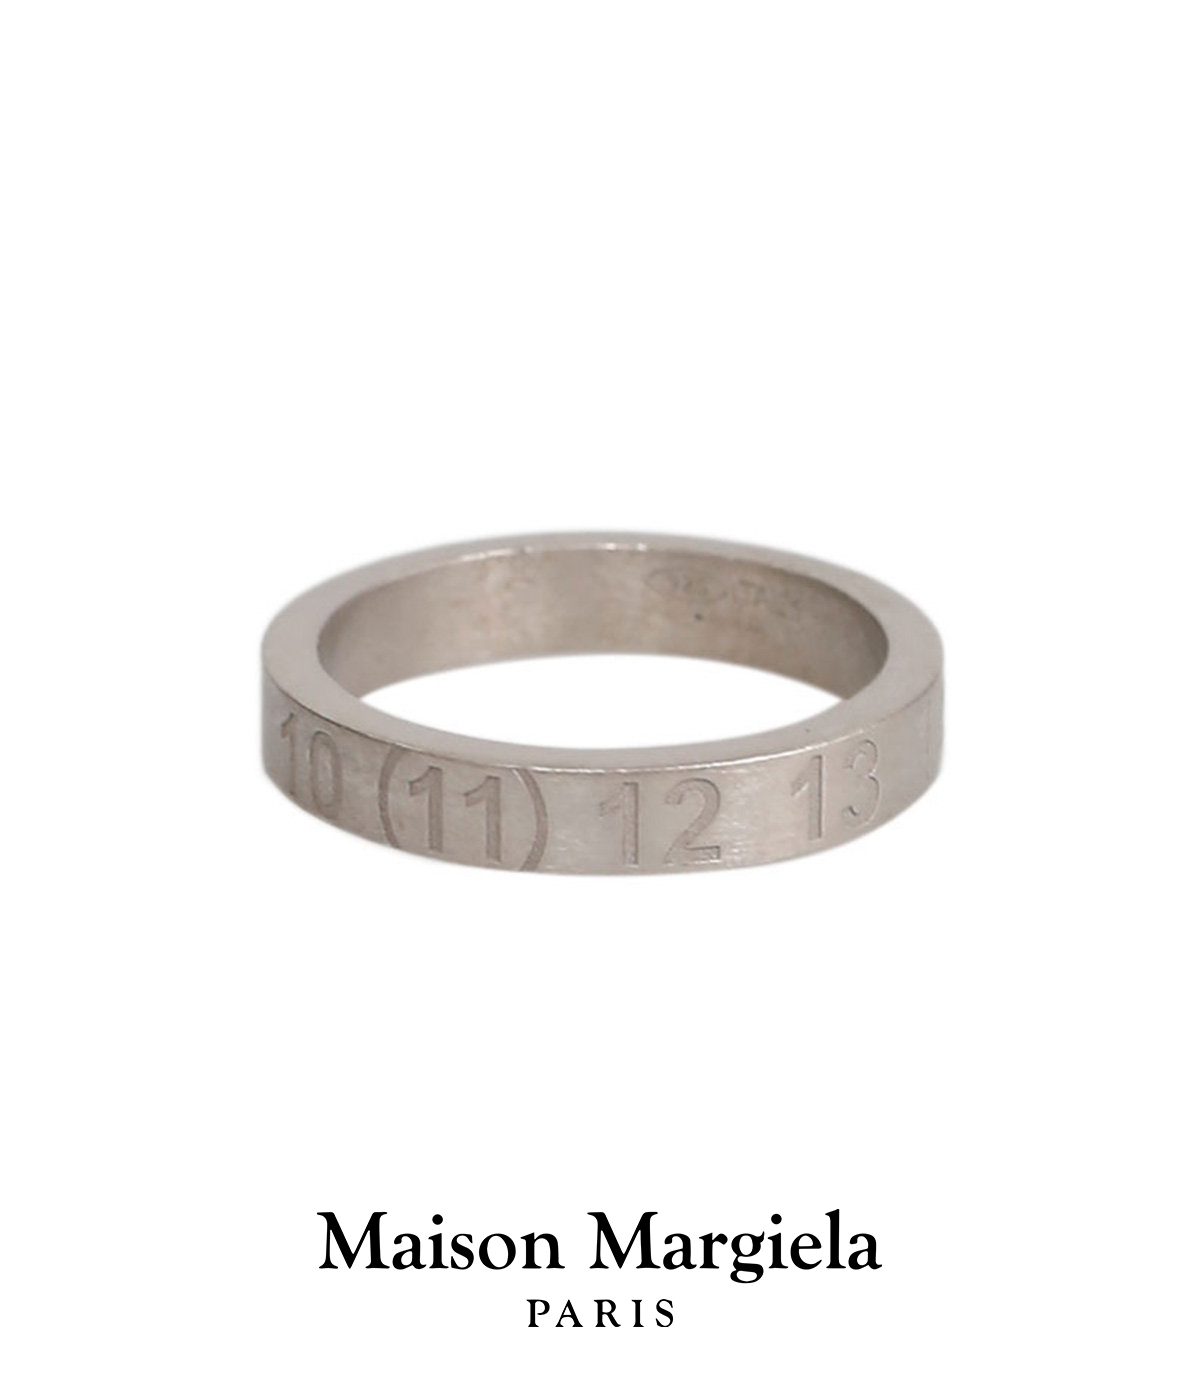 Maison Margiela   メゾン マルジェラ RING リング 指輪 アクセサリー ナンバーリング ナンバー 数字 メンズ 小物 イタリア製 シルバー シンプル 刻印 プレゼント ギフト 誕生日 記念日 SM1UQ0048